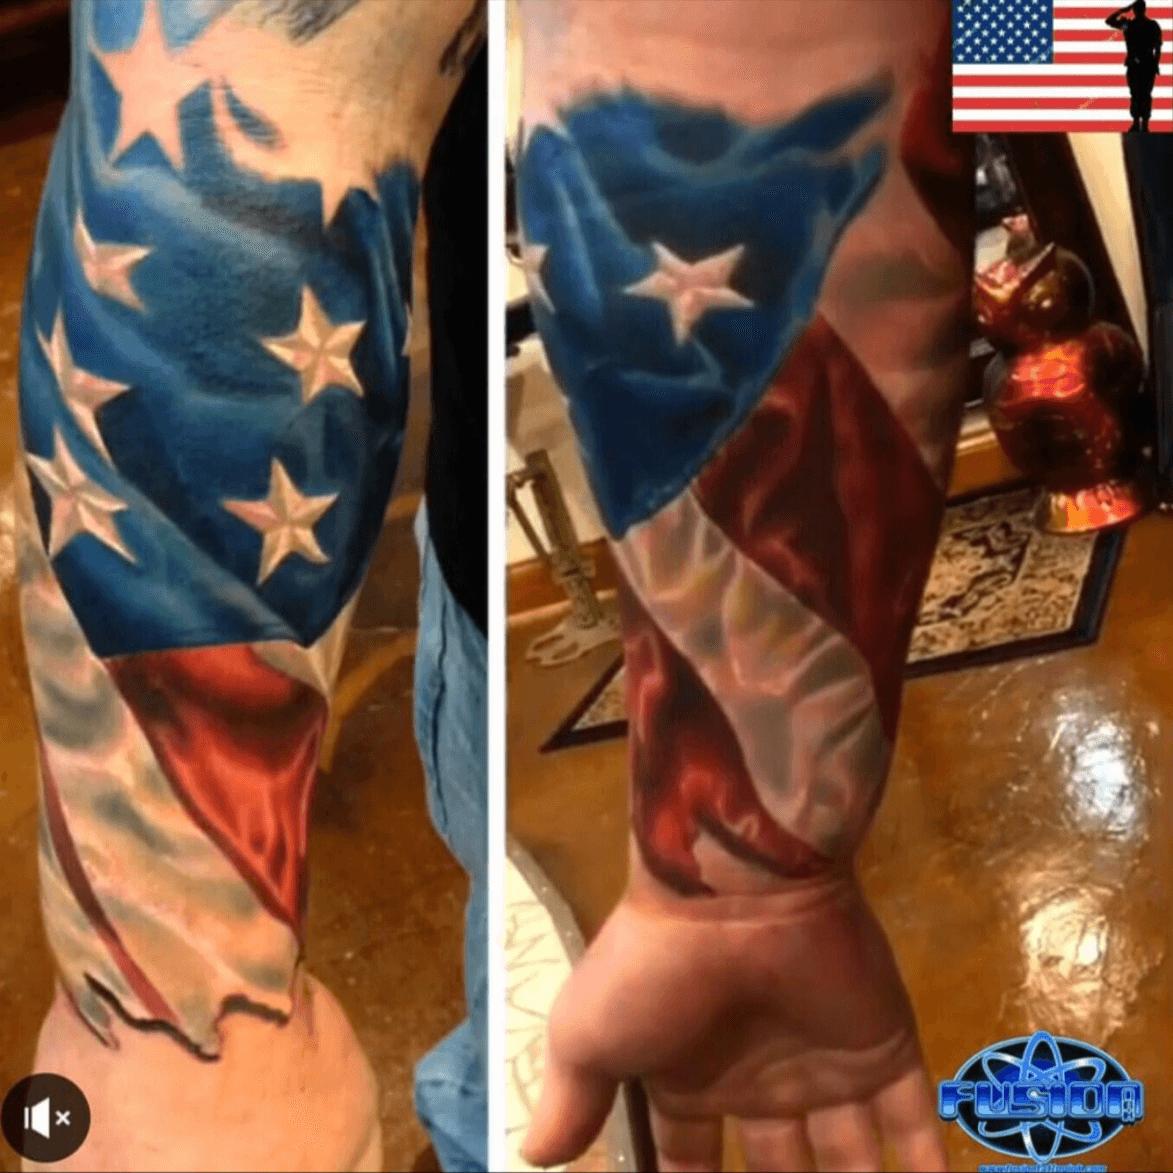 BritishEnglish Union Jack Flag Tattoo  Picture tattoos Flag tattoo  Tattoo uk